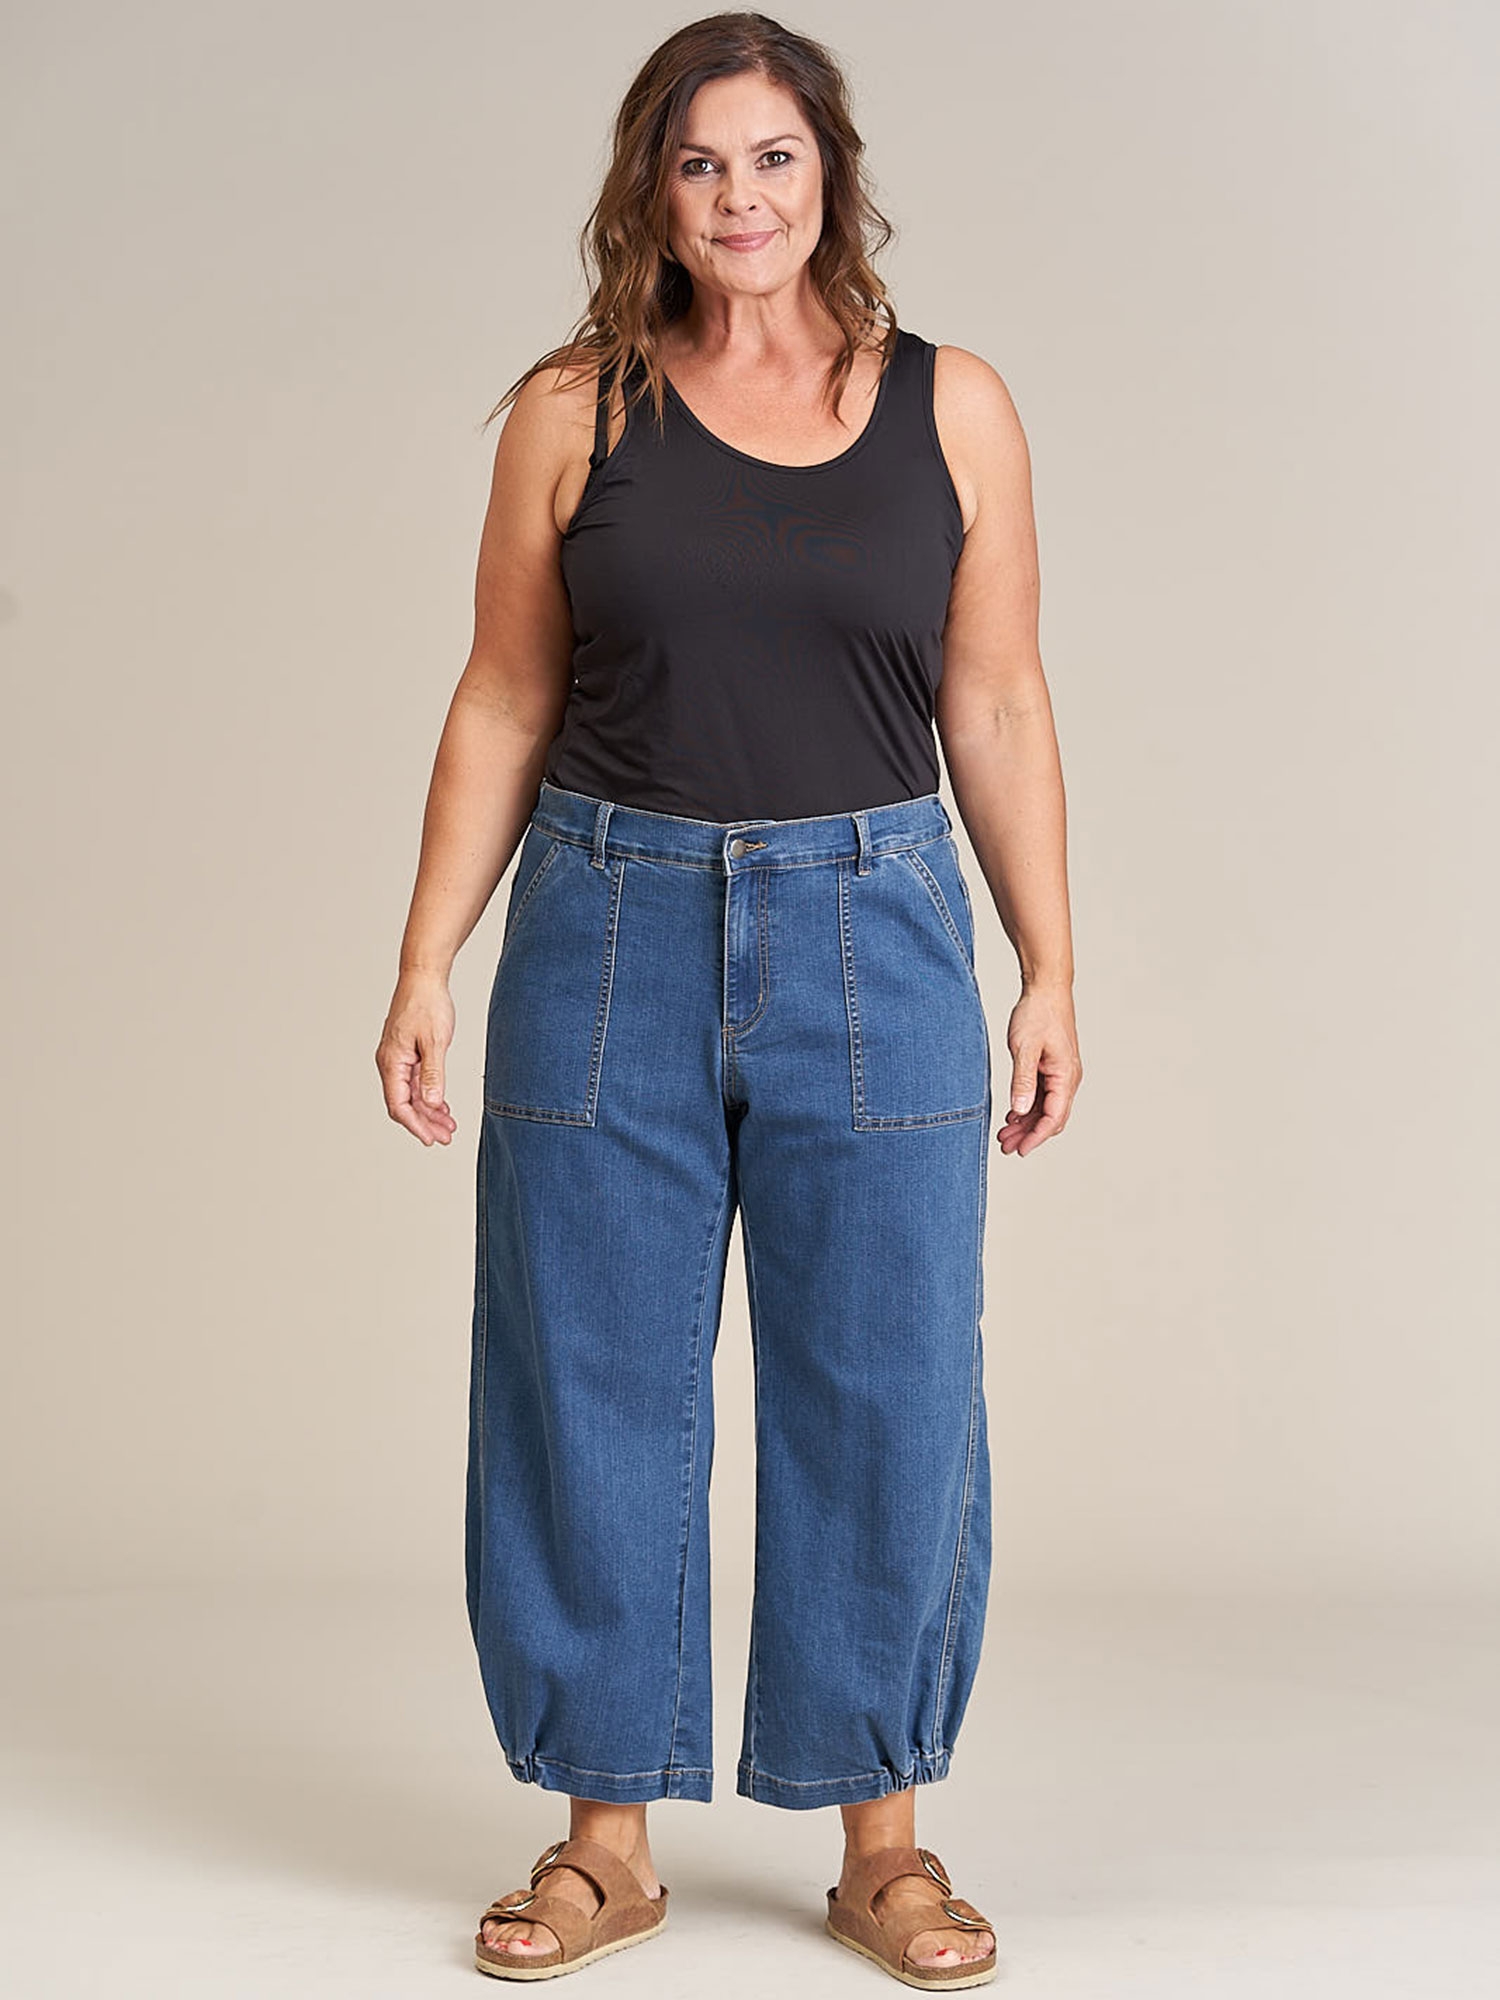 CLARA - Løse rummelige denim jeans / baggy pants fra Gozzip